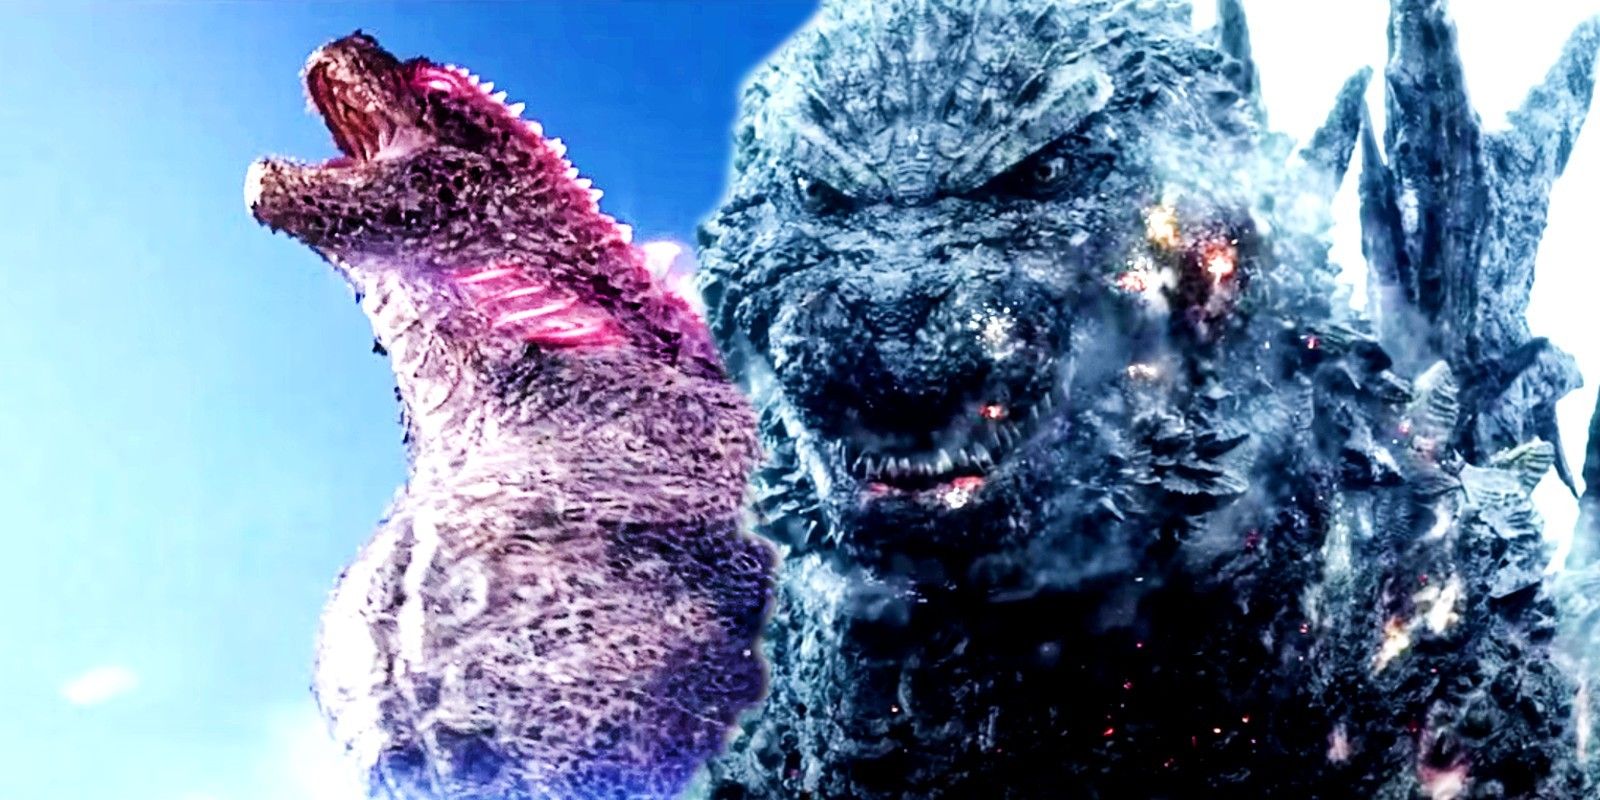 Godzilla screaming in Godzilla x Kong with his pink energy and Gojira smiling in Godzilla Minus One